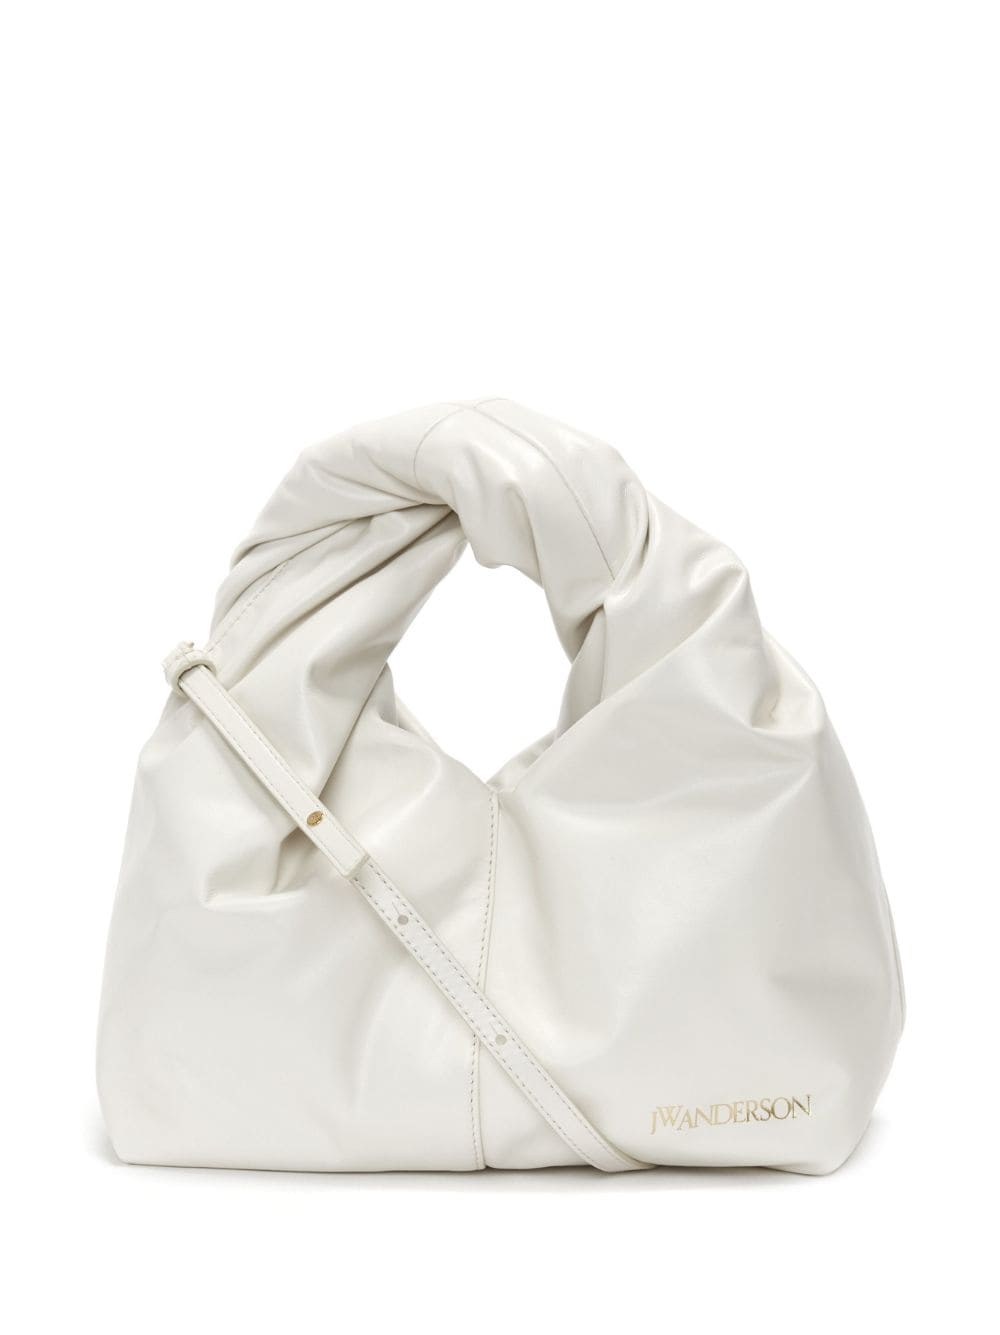 JW Anderson mini Twister leather crossbody bag - White